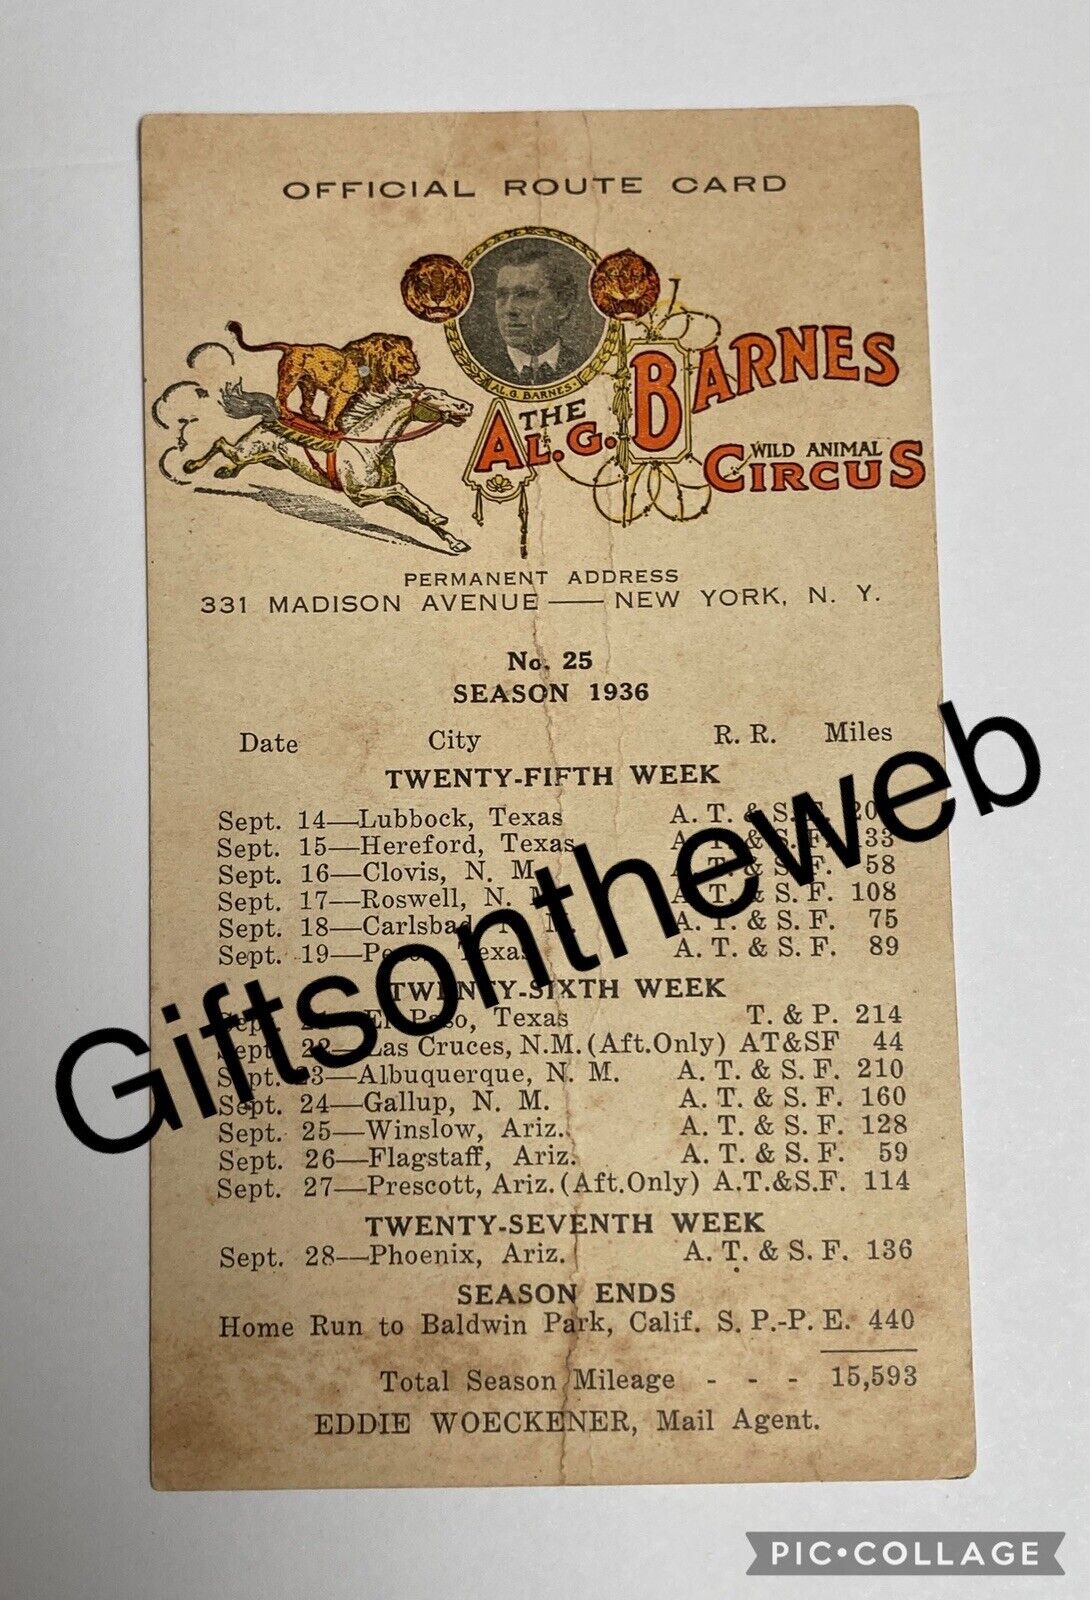 1936 Al G Barnes Wild Animal Circus Railroad Route Card Baldwin Park, California